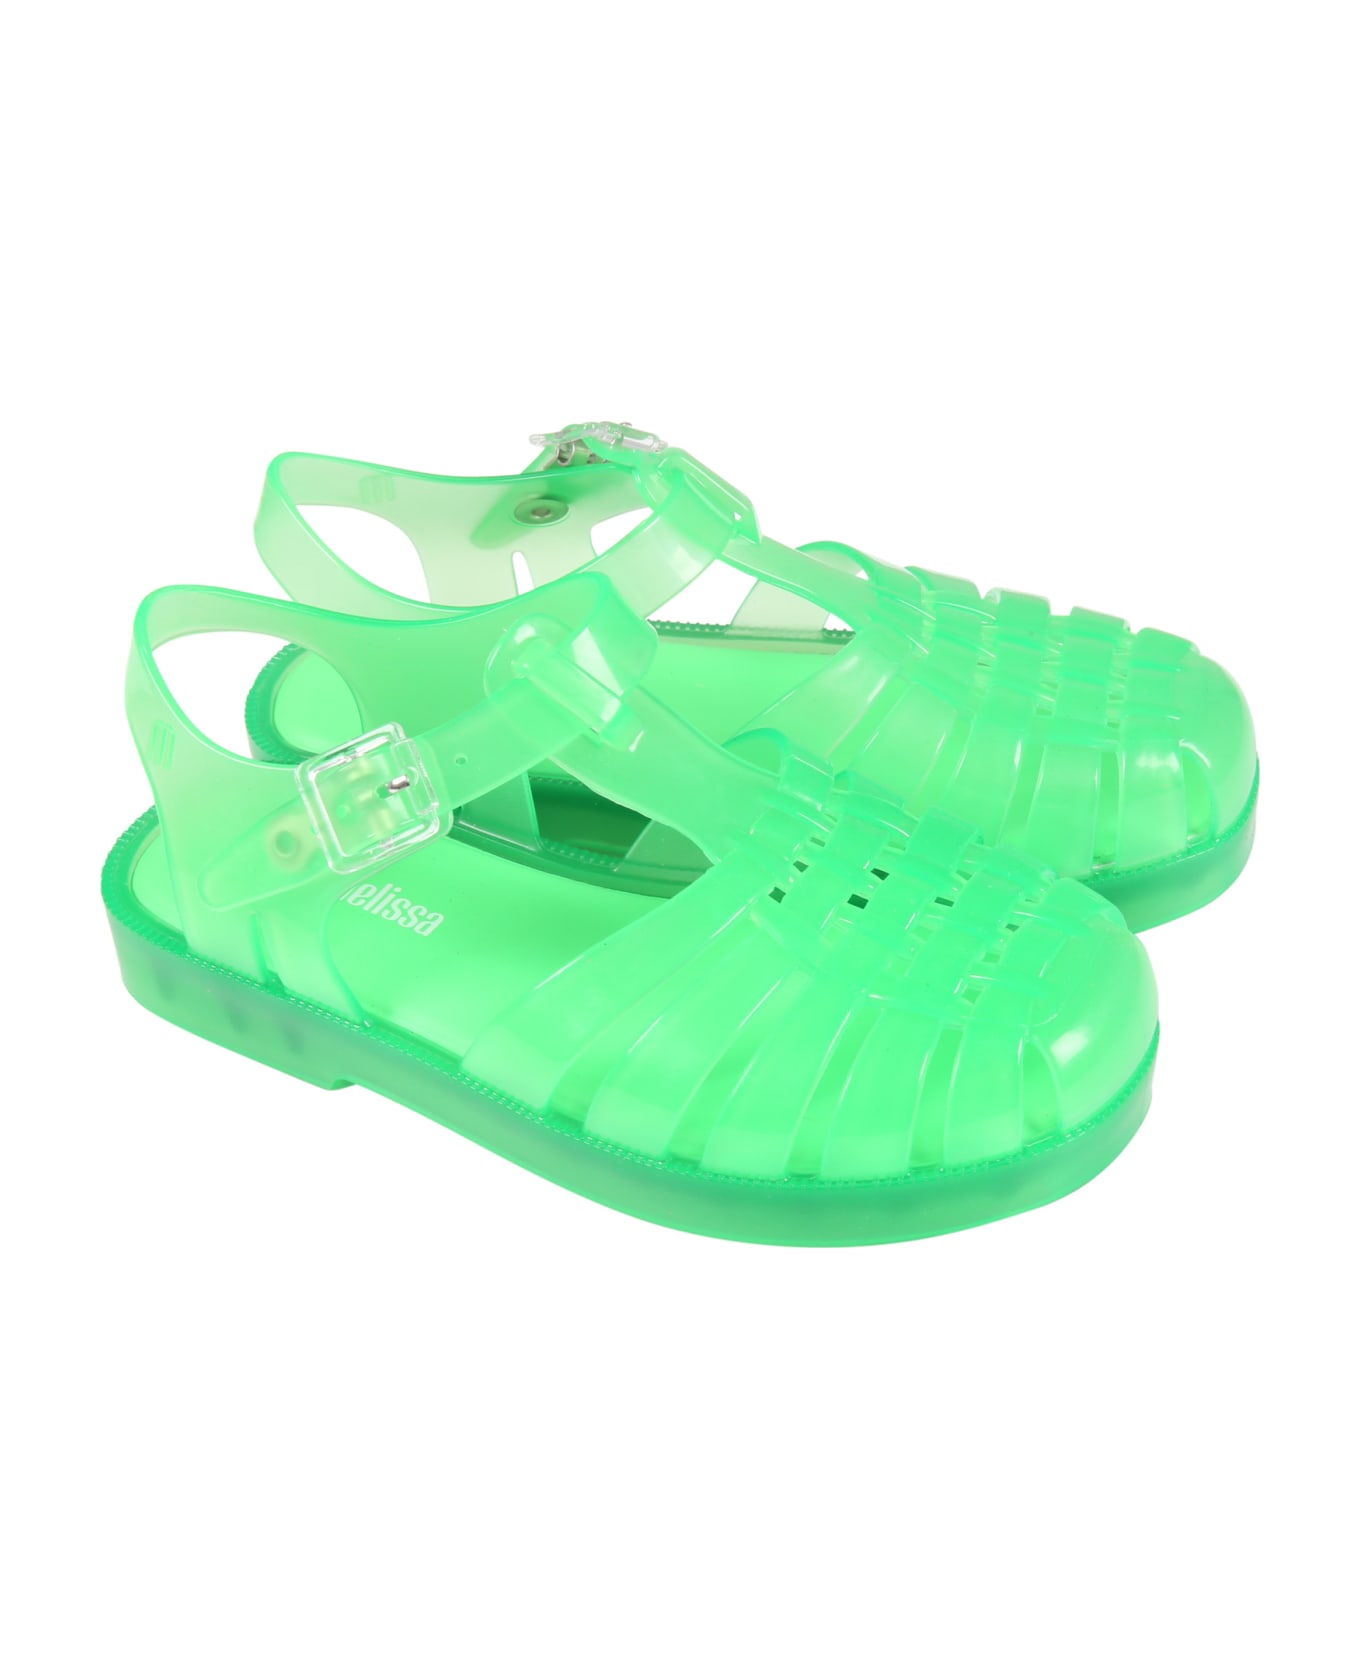 Melissa Green Sandals For Kids - Green